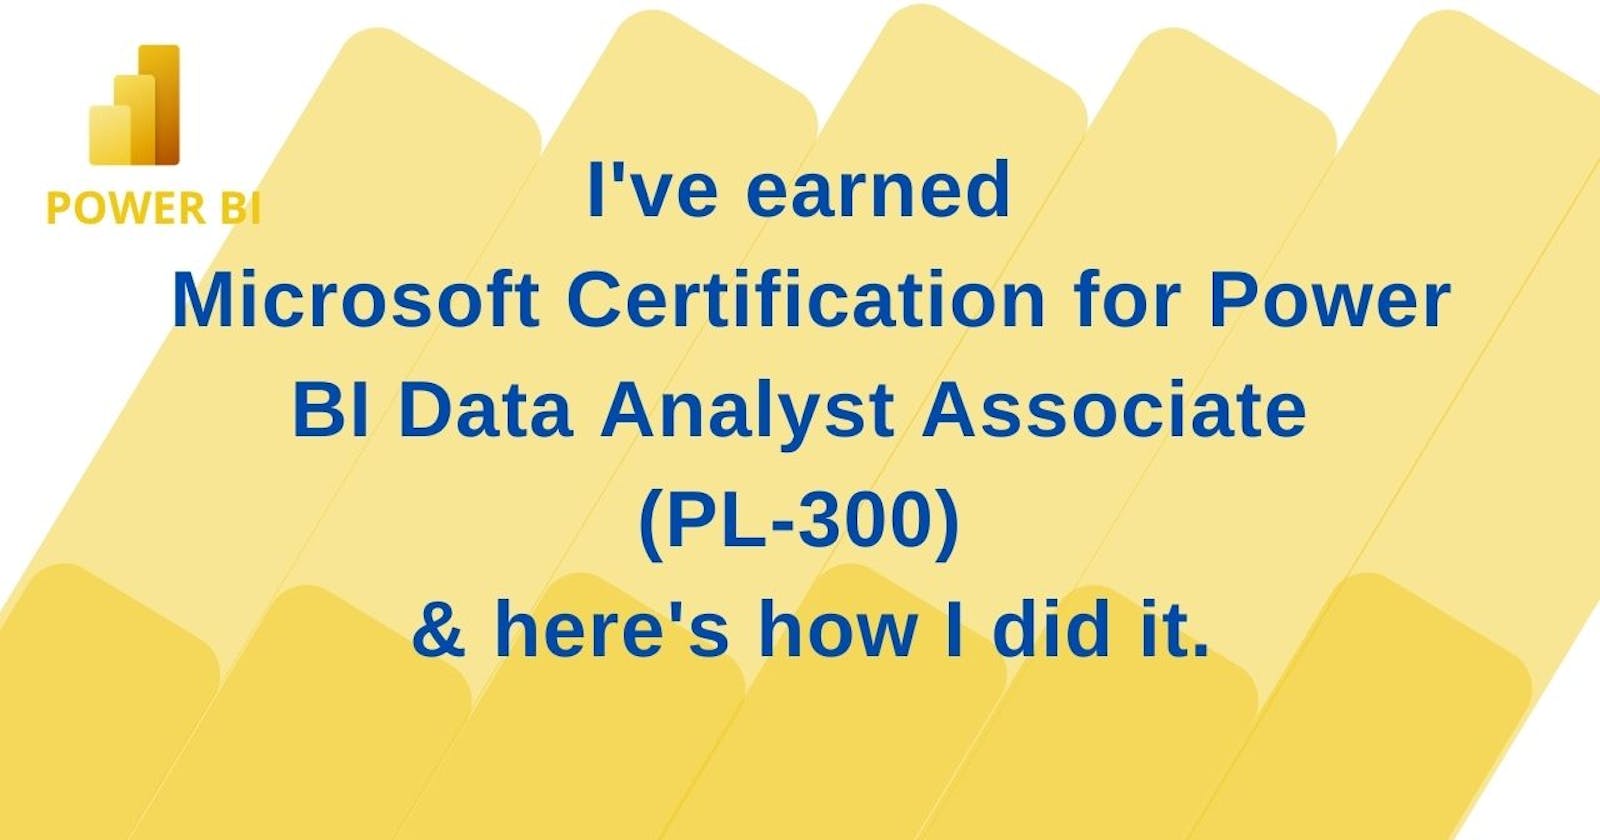 I've earned Microsoft certification for Power BI Data Analyst Associate (PL-300) & here's how I did it.🎉